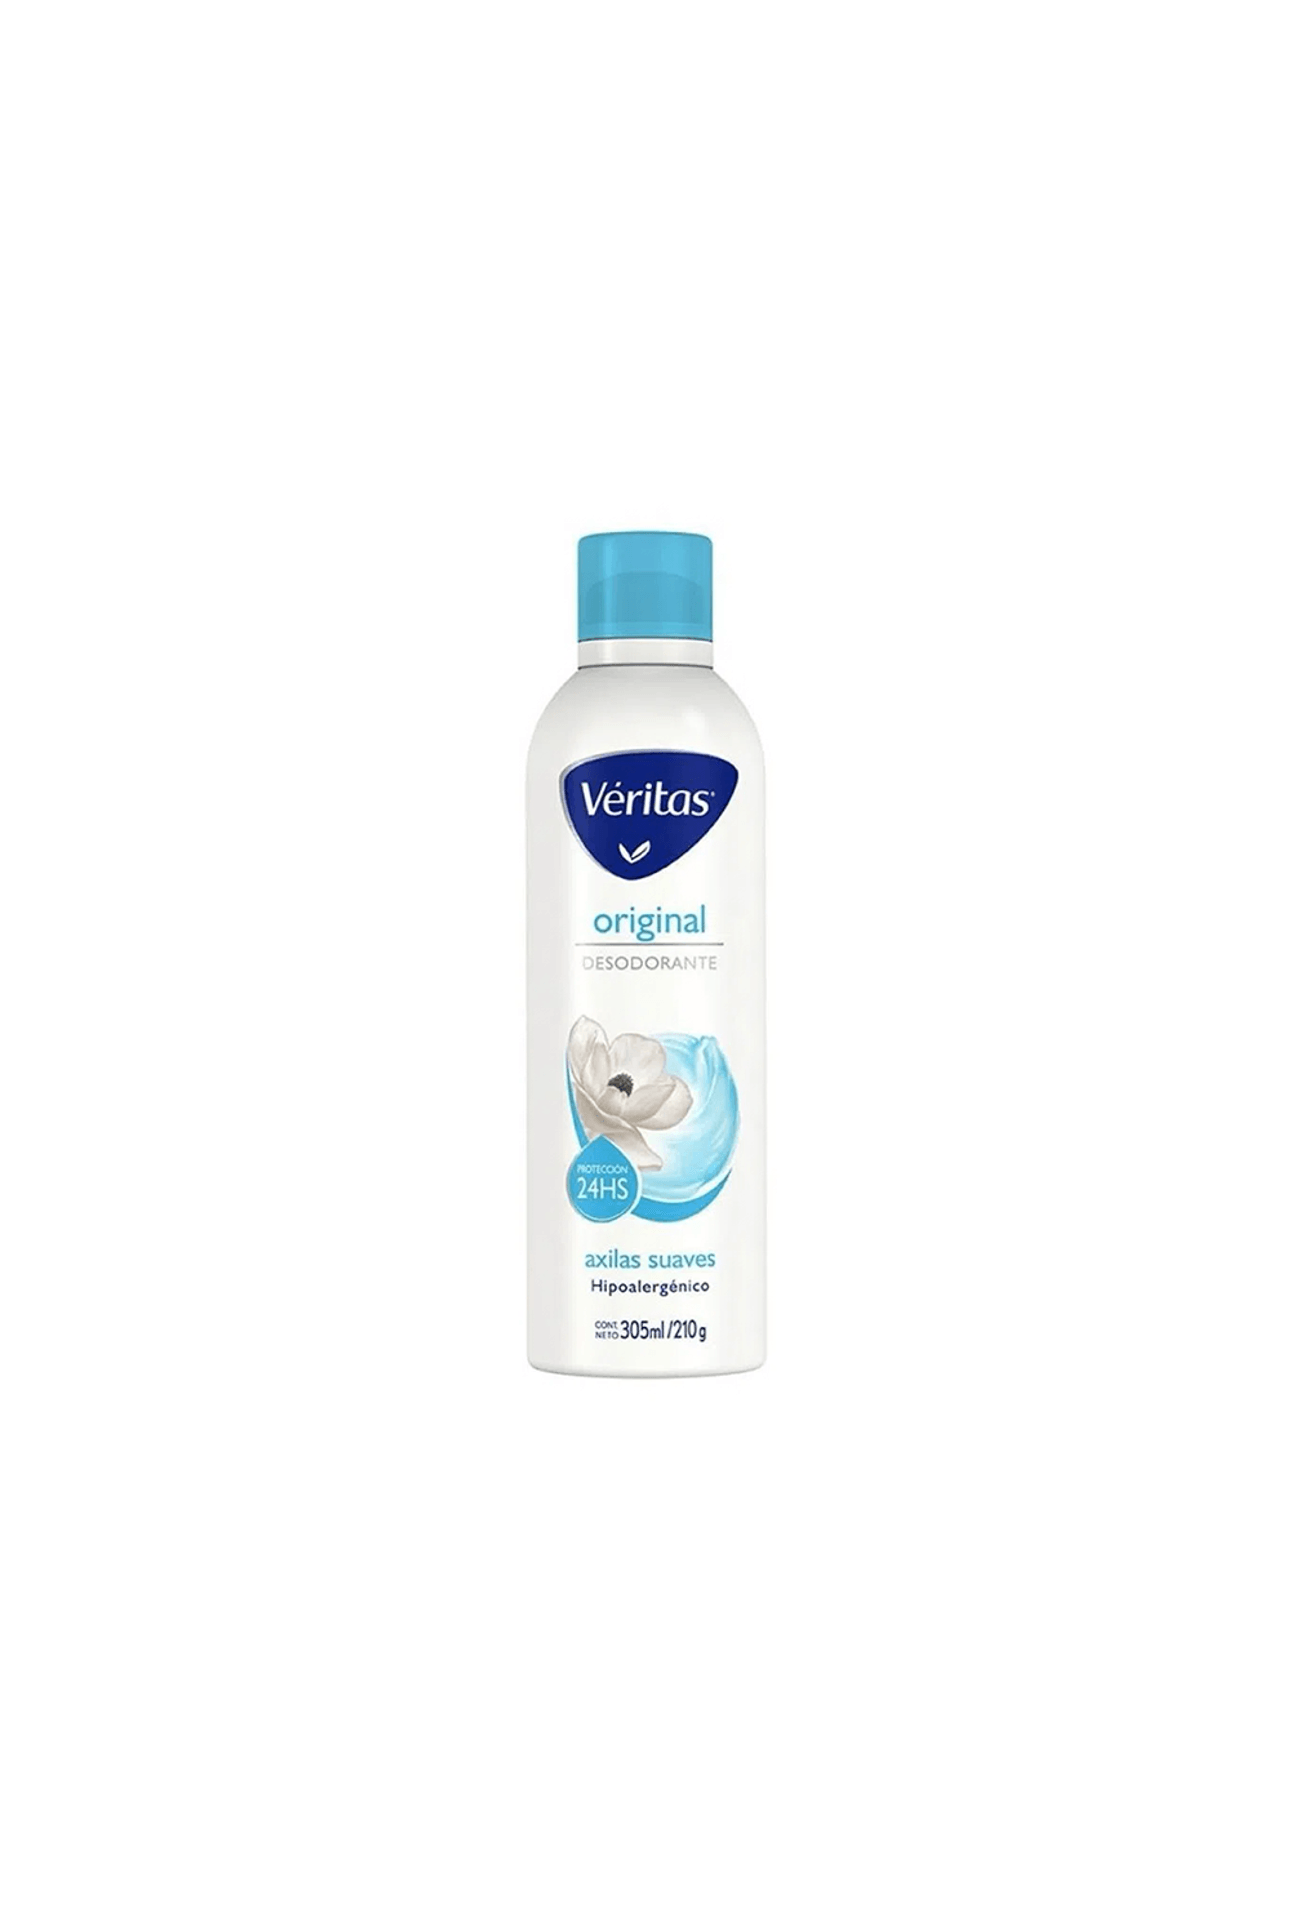 Veritas-Desodorante-Original-en-Aerosol-x-305-ml-7791520006407_img1